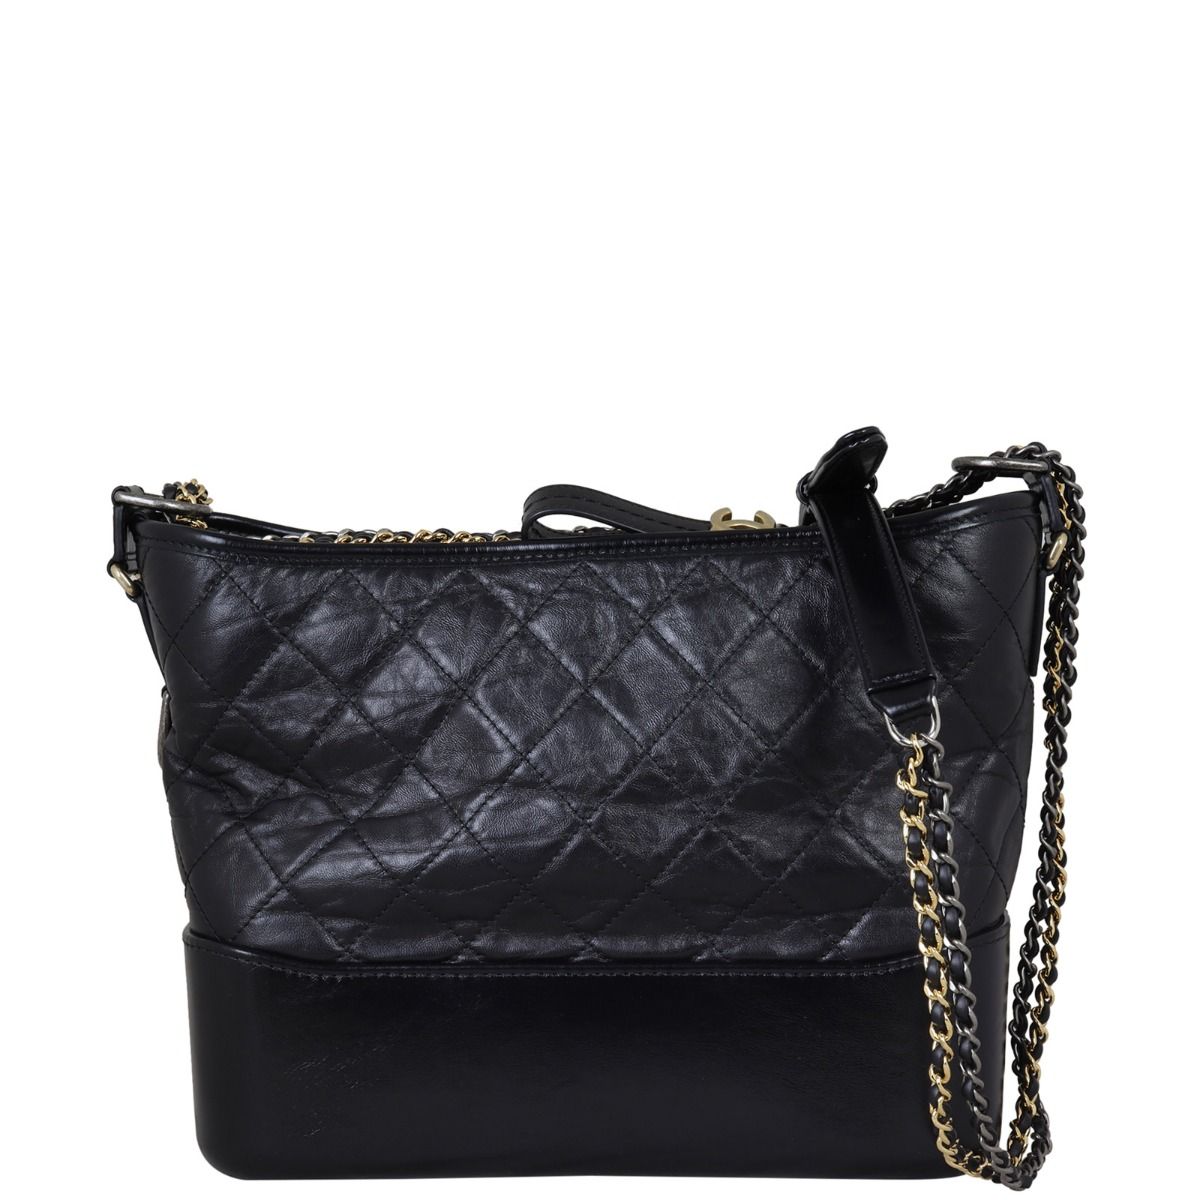 Chanel introduces Gabrielle its first major handbag line since The Boy bag